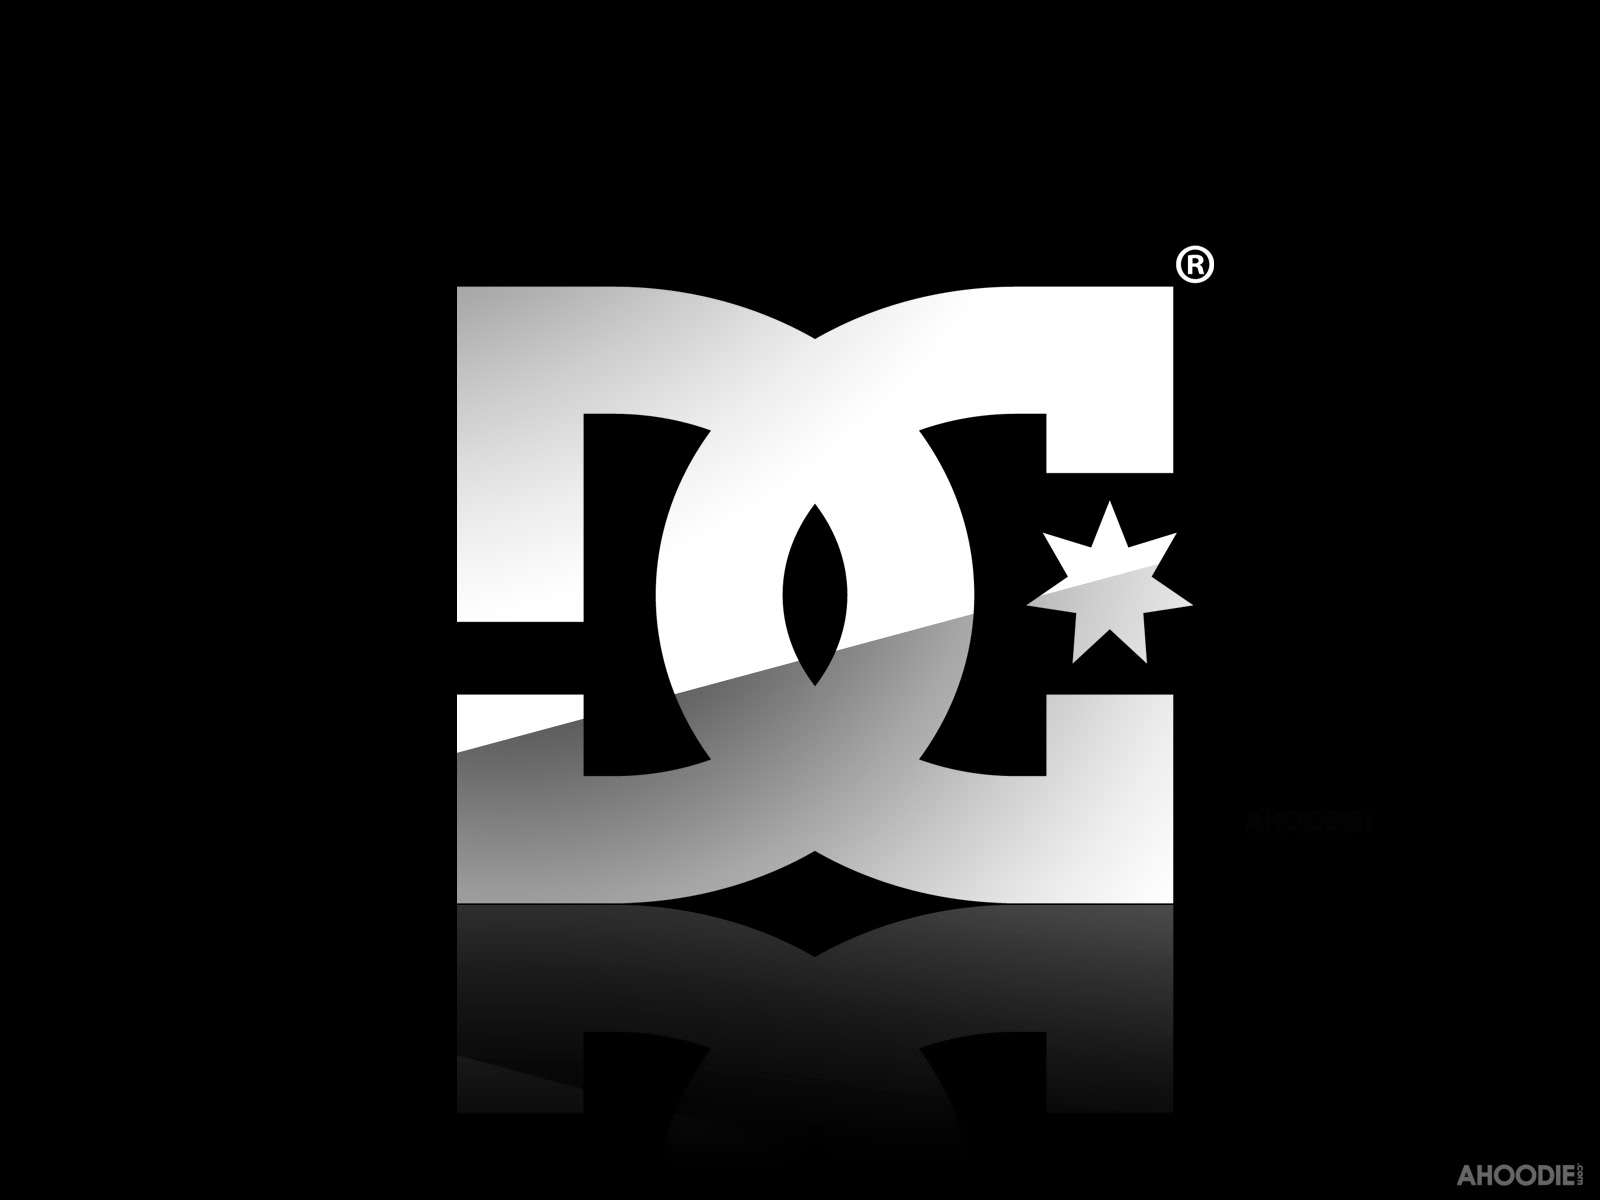 dc logo wallpaper,text,logo,font,black and white,graphic design